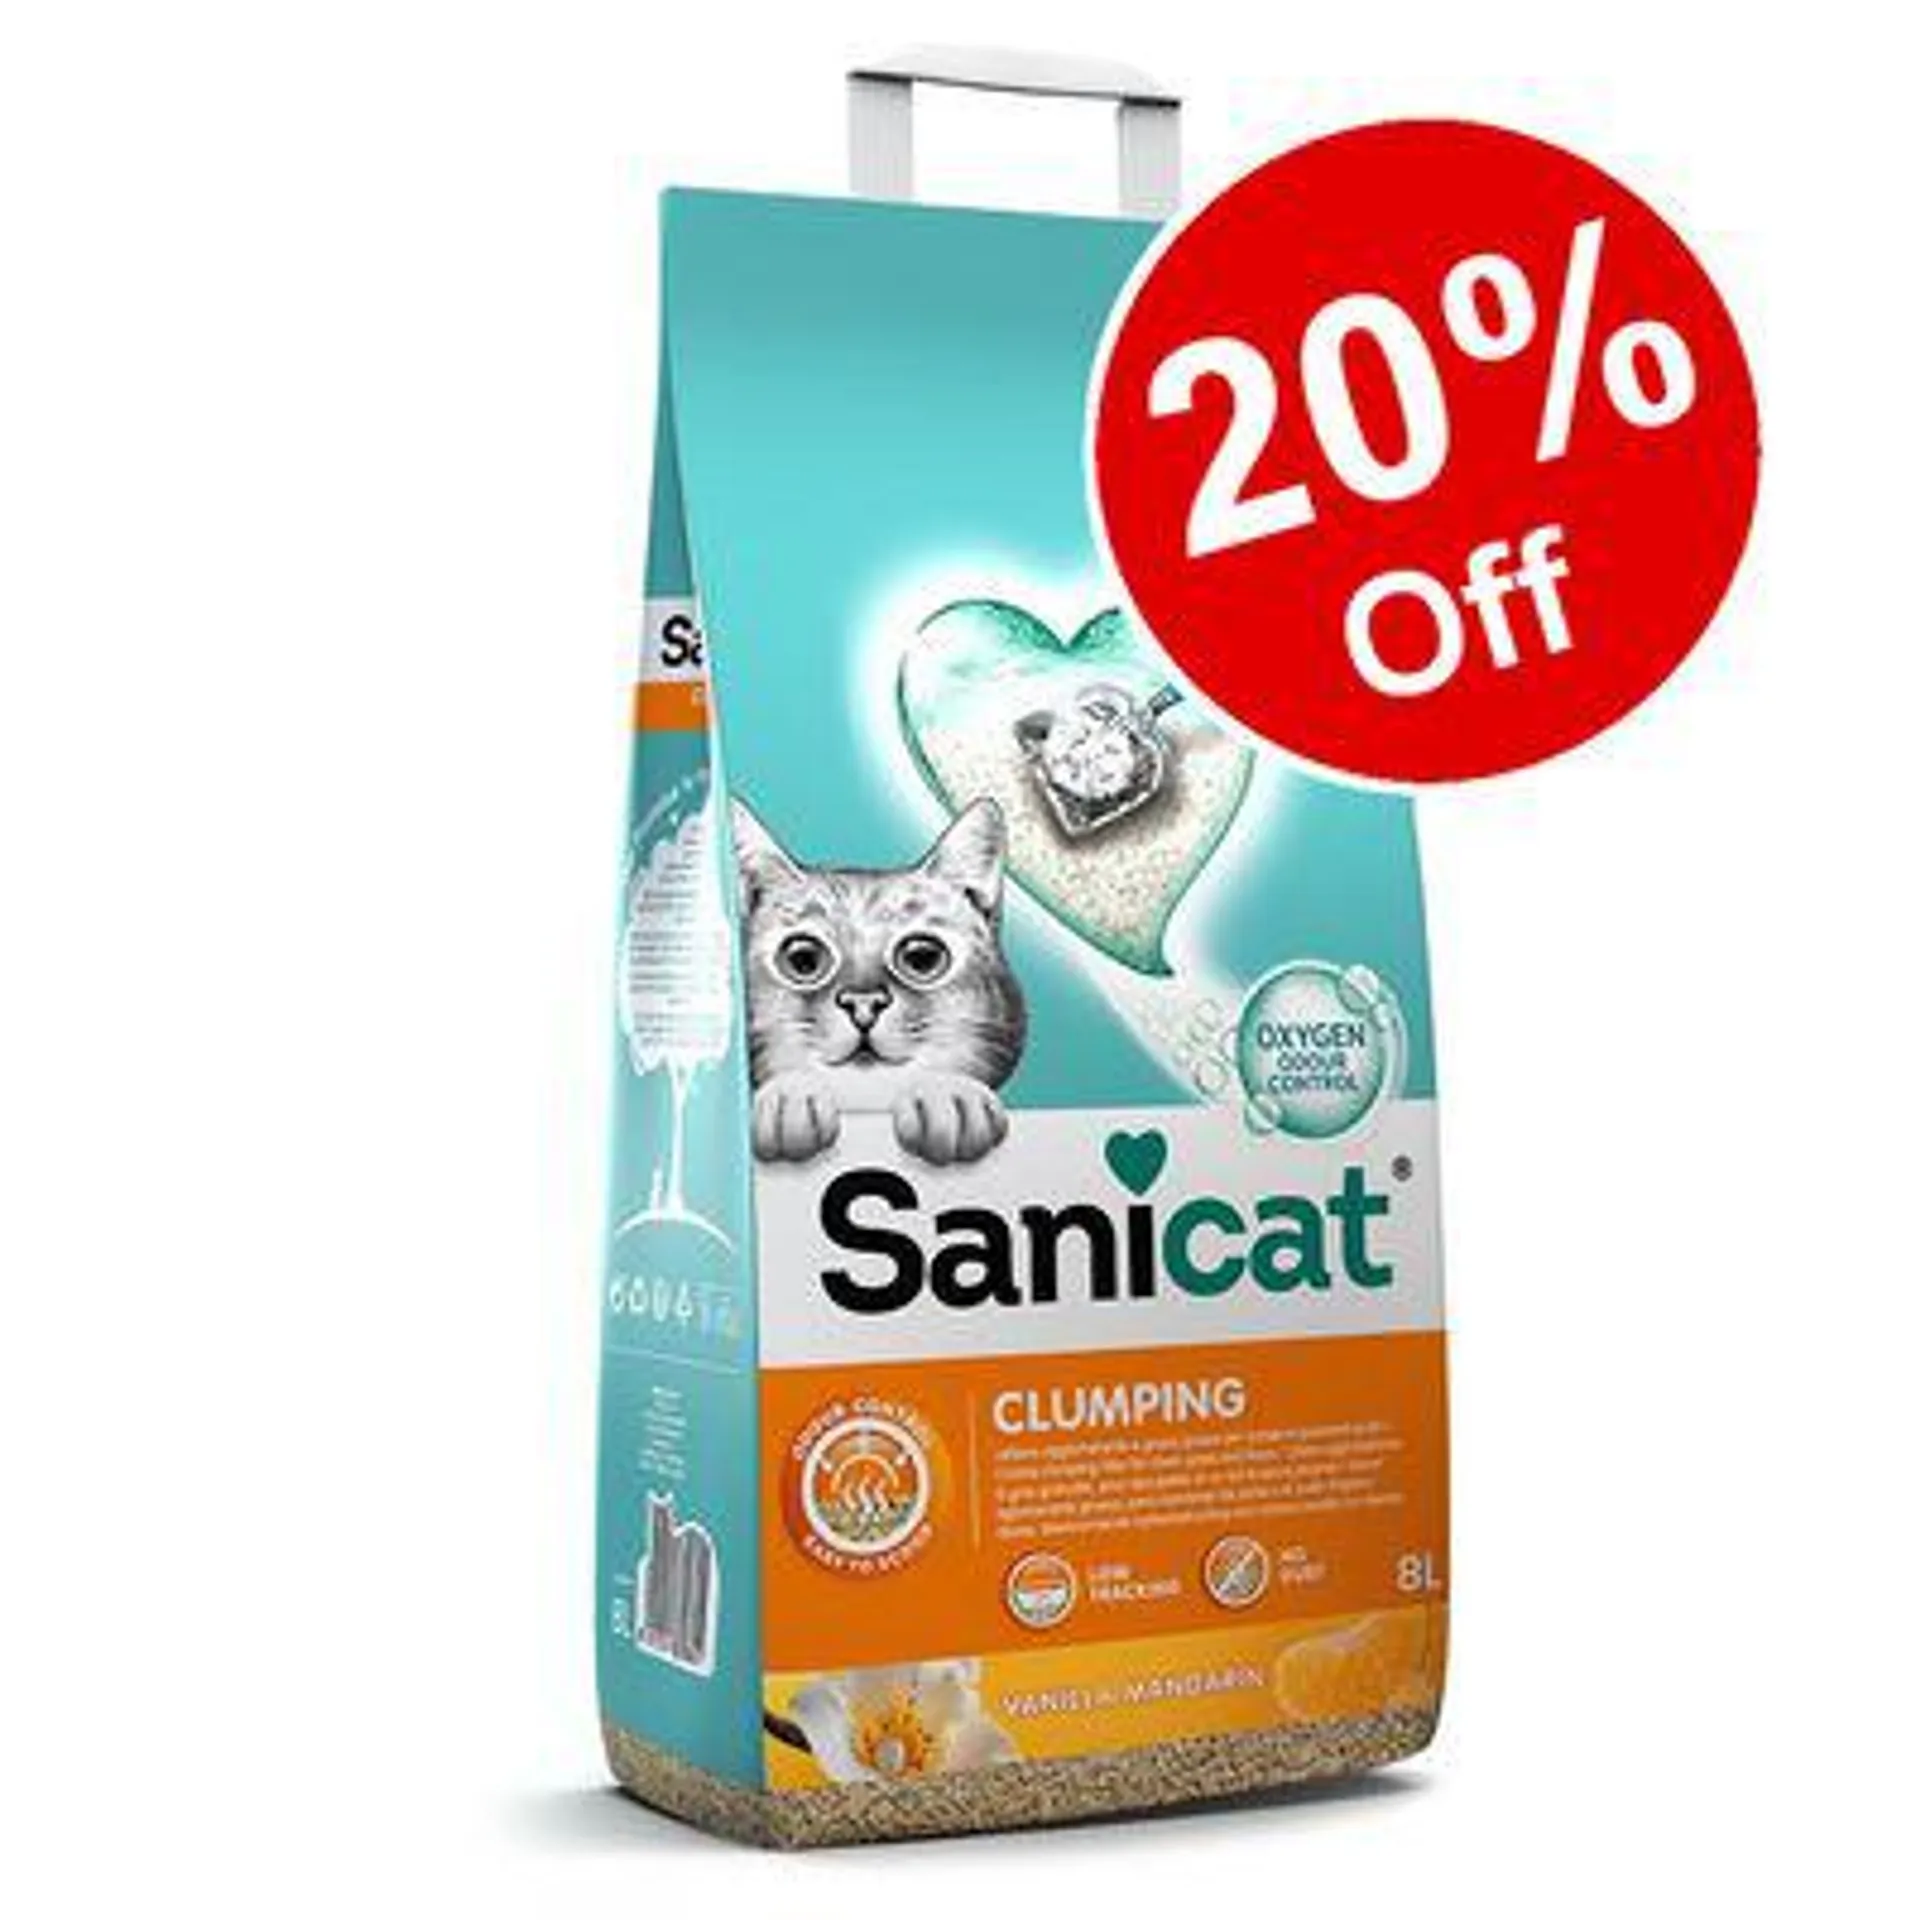 8l Sanicat Clumping Cat Litter - 20% Off!*